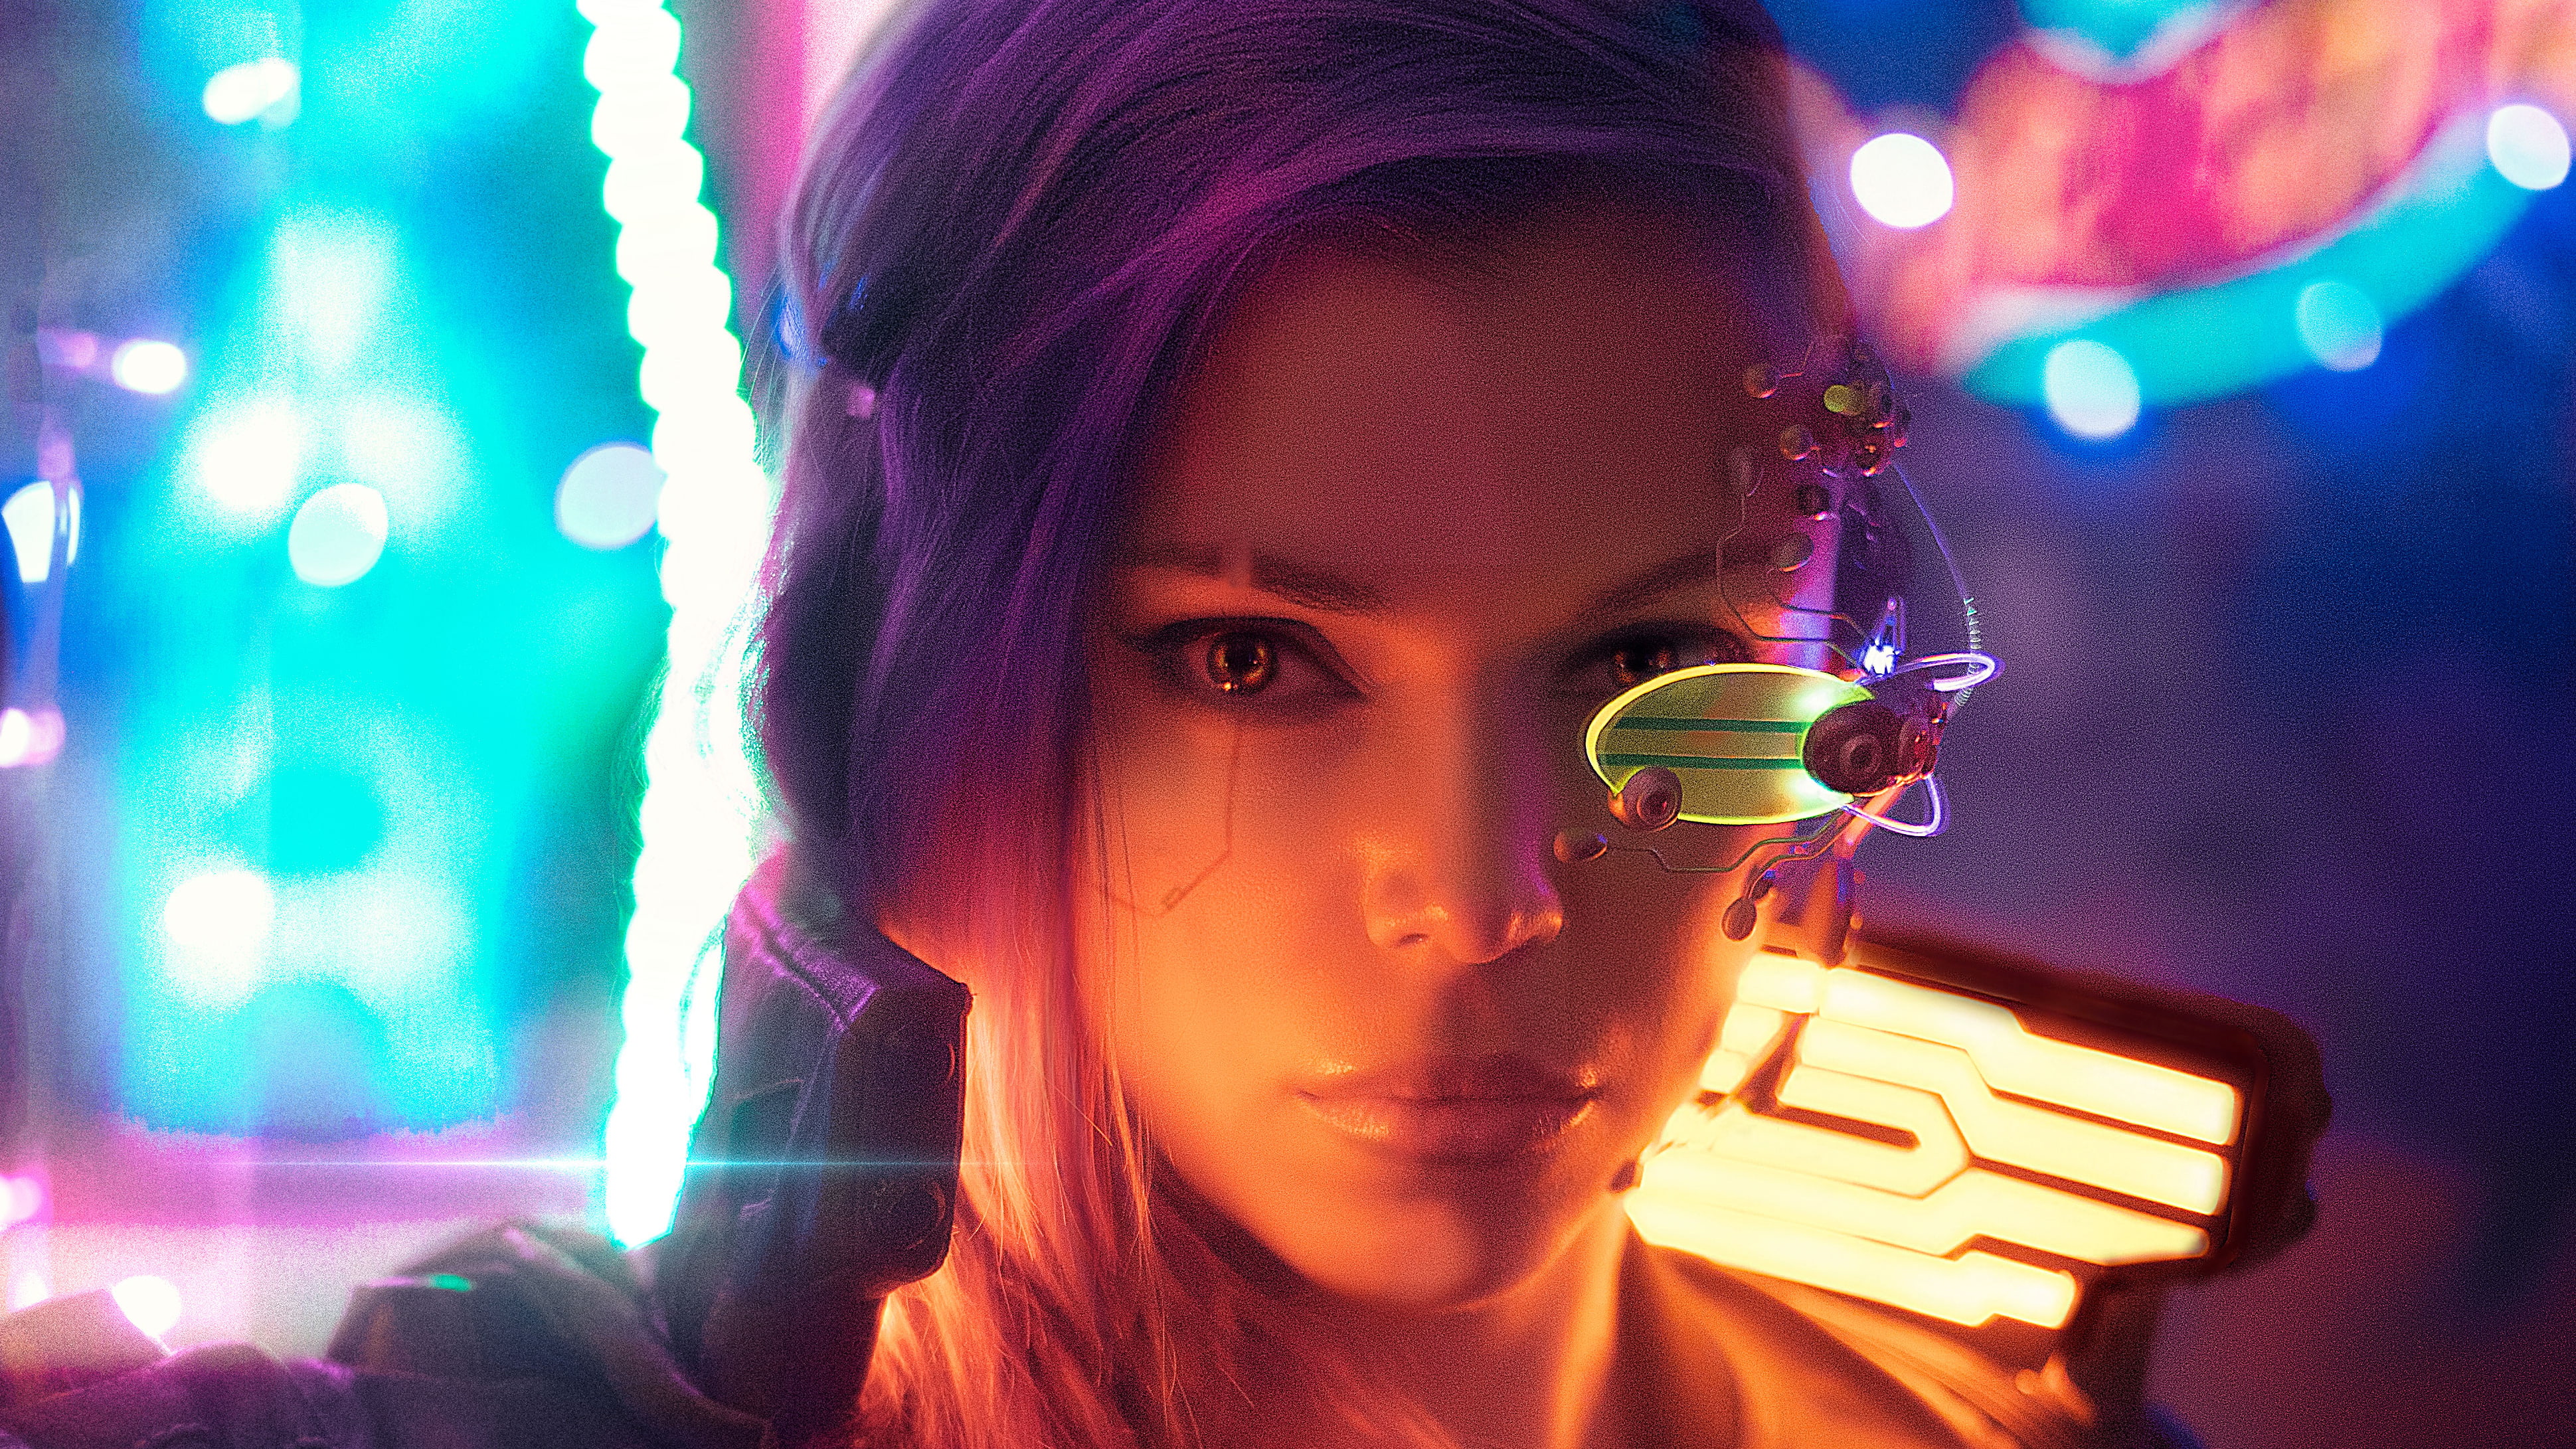 Sci Fi, Cyberpunk, Face, Girl, Purple Hair, Woman